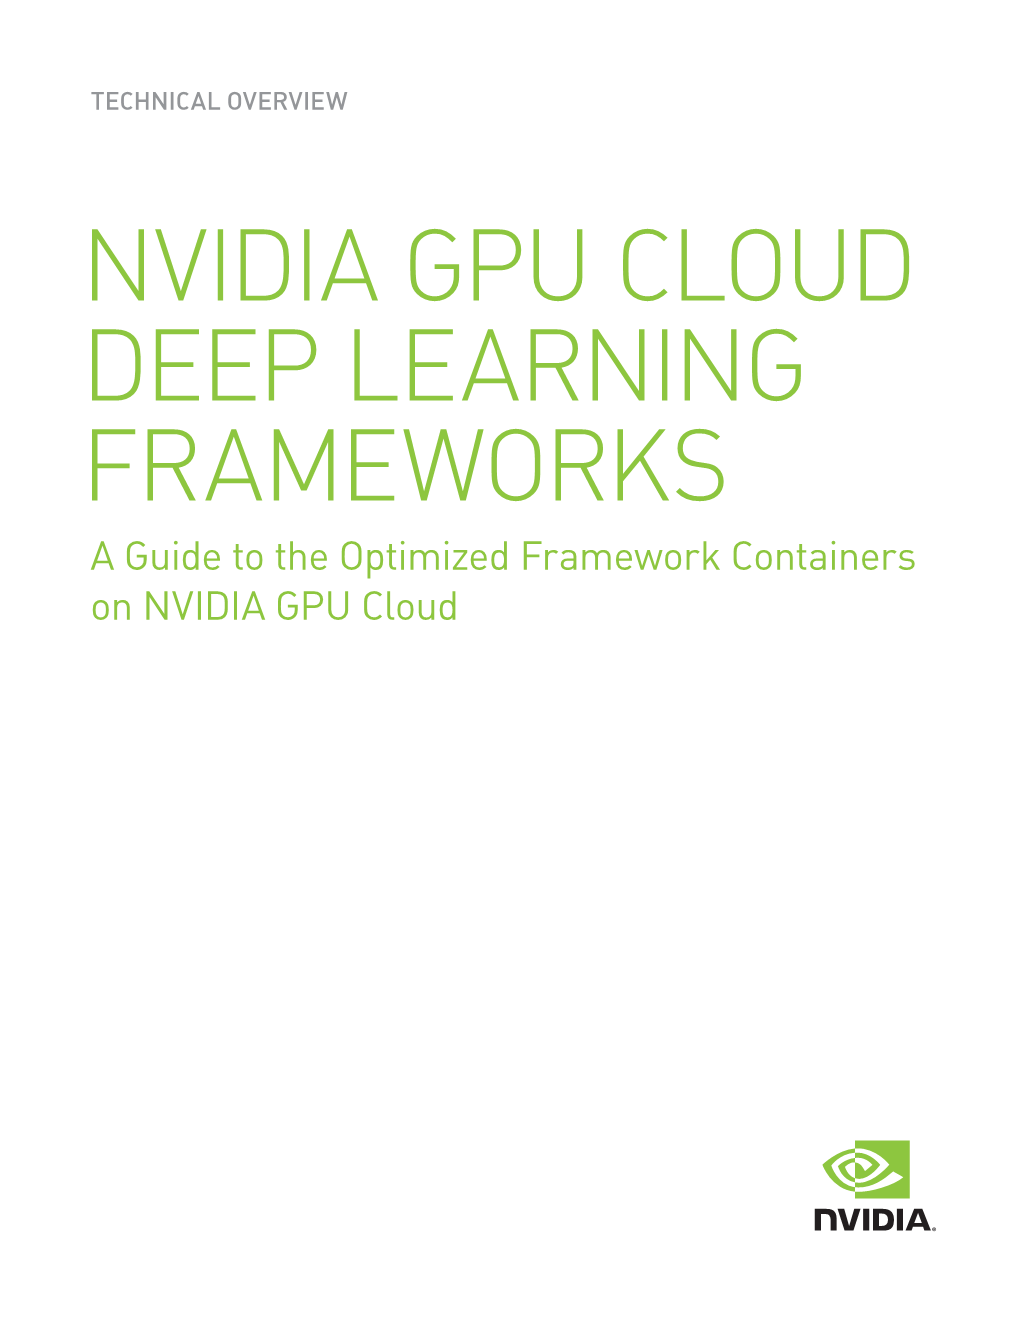 NVIDIA GPU CLOUD DEEP LEARNING FRAMEWORKS a Guide to the Optimized Framework Containers on NVIDIA GPU Cloud Introduction